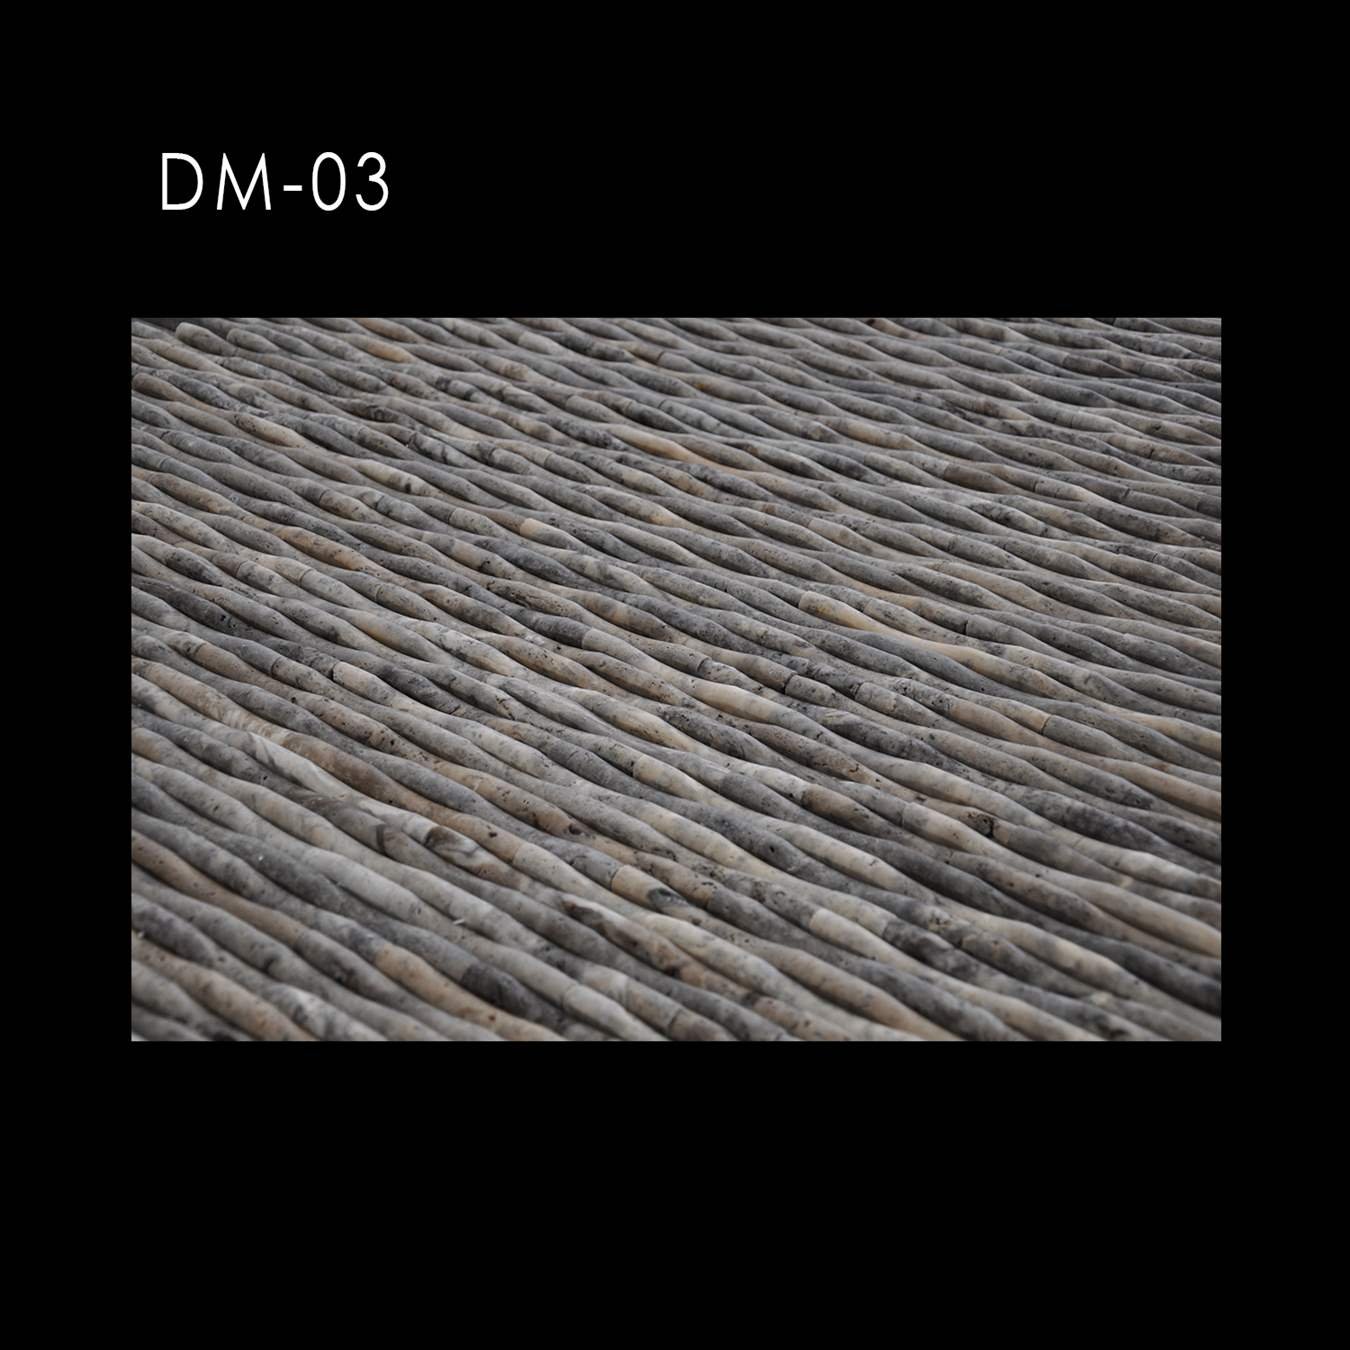 dm03 - efesusstone mermer